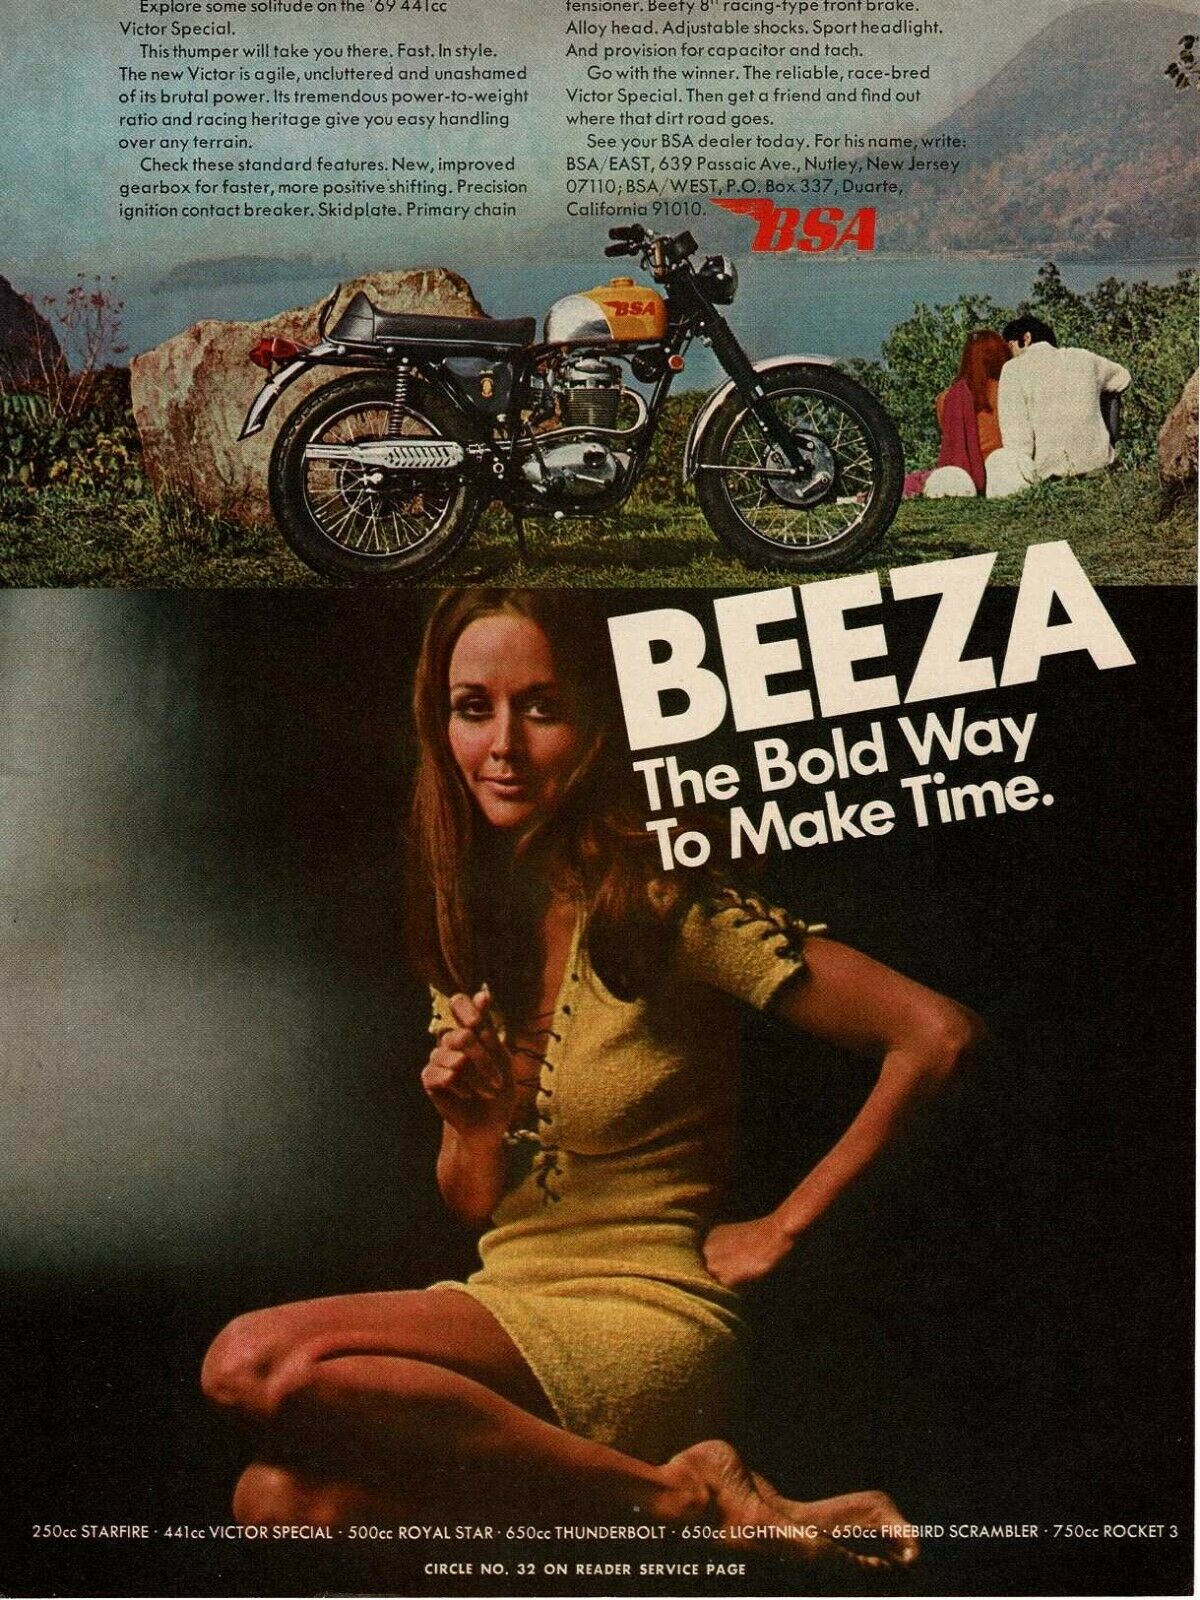 1969 Bsa 441 Victor Special Motorcycle Beeza Sexy Girl Vintage Ad